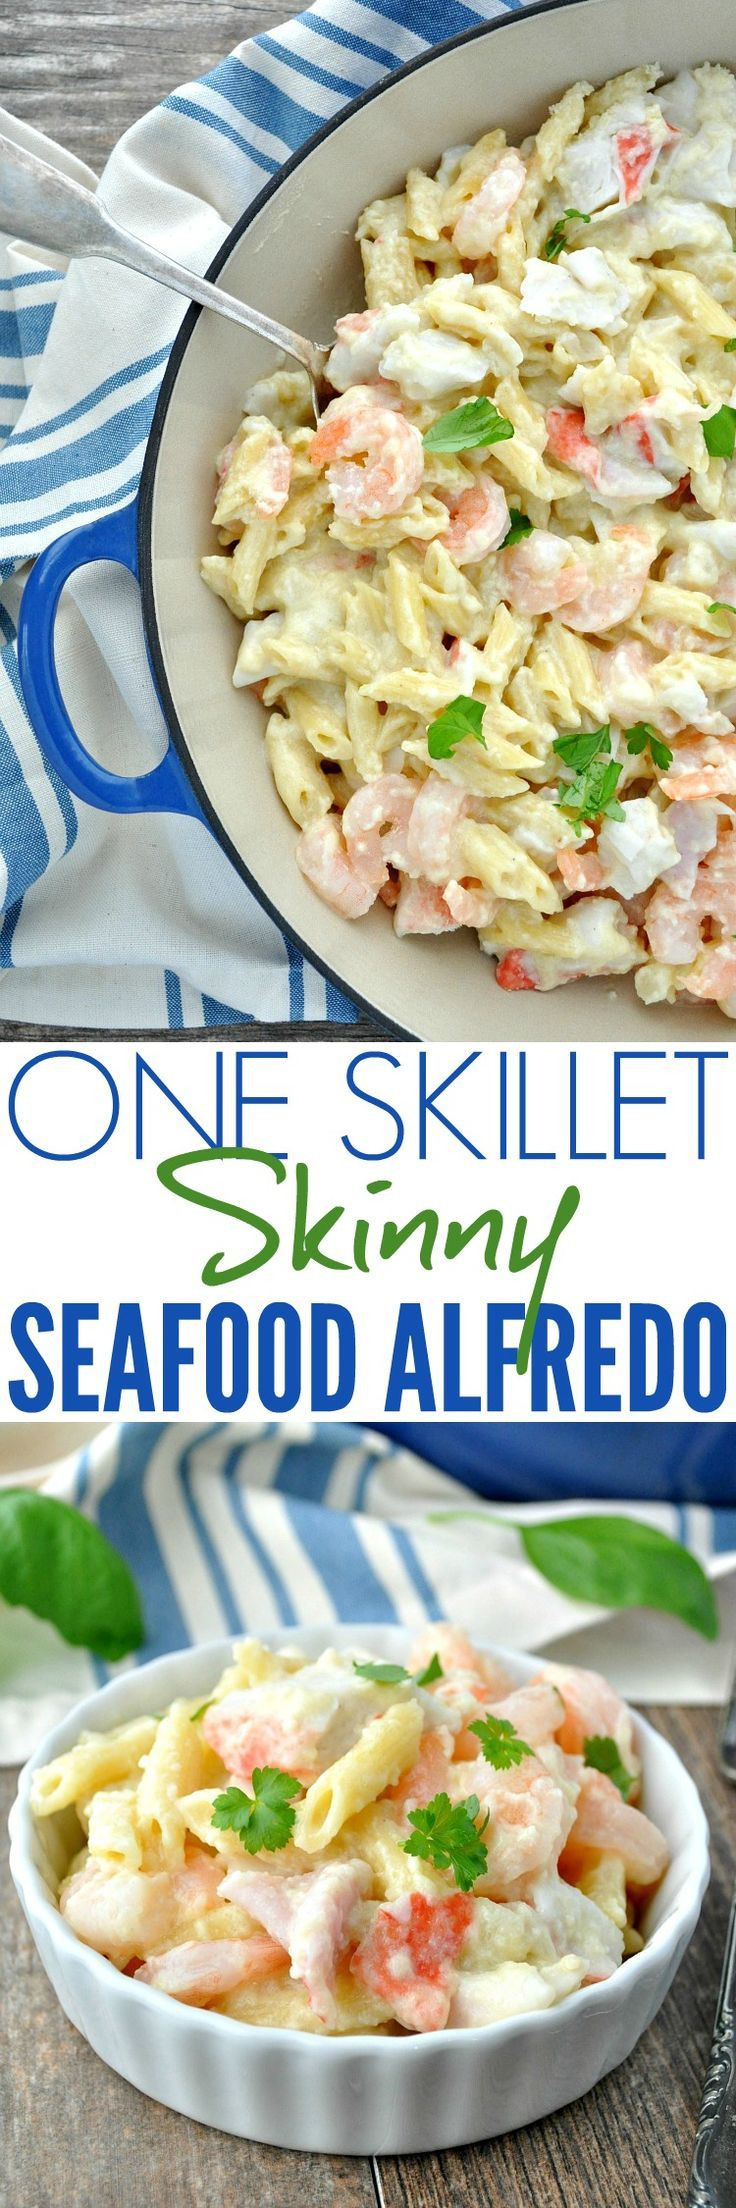 Fast Healthy Dinner
 e Skillet Skinny Seafood Alfredo Recipe